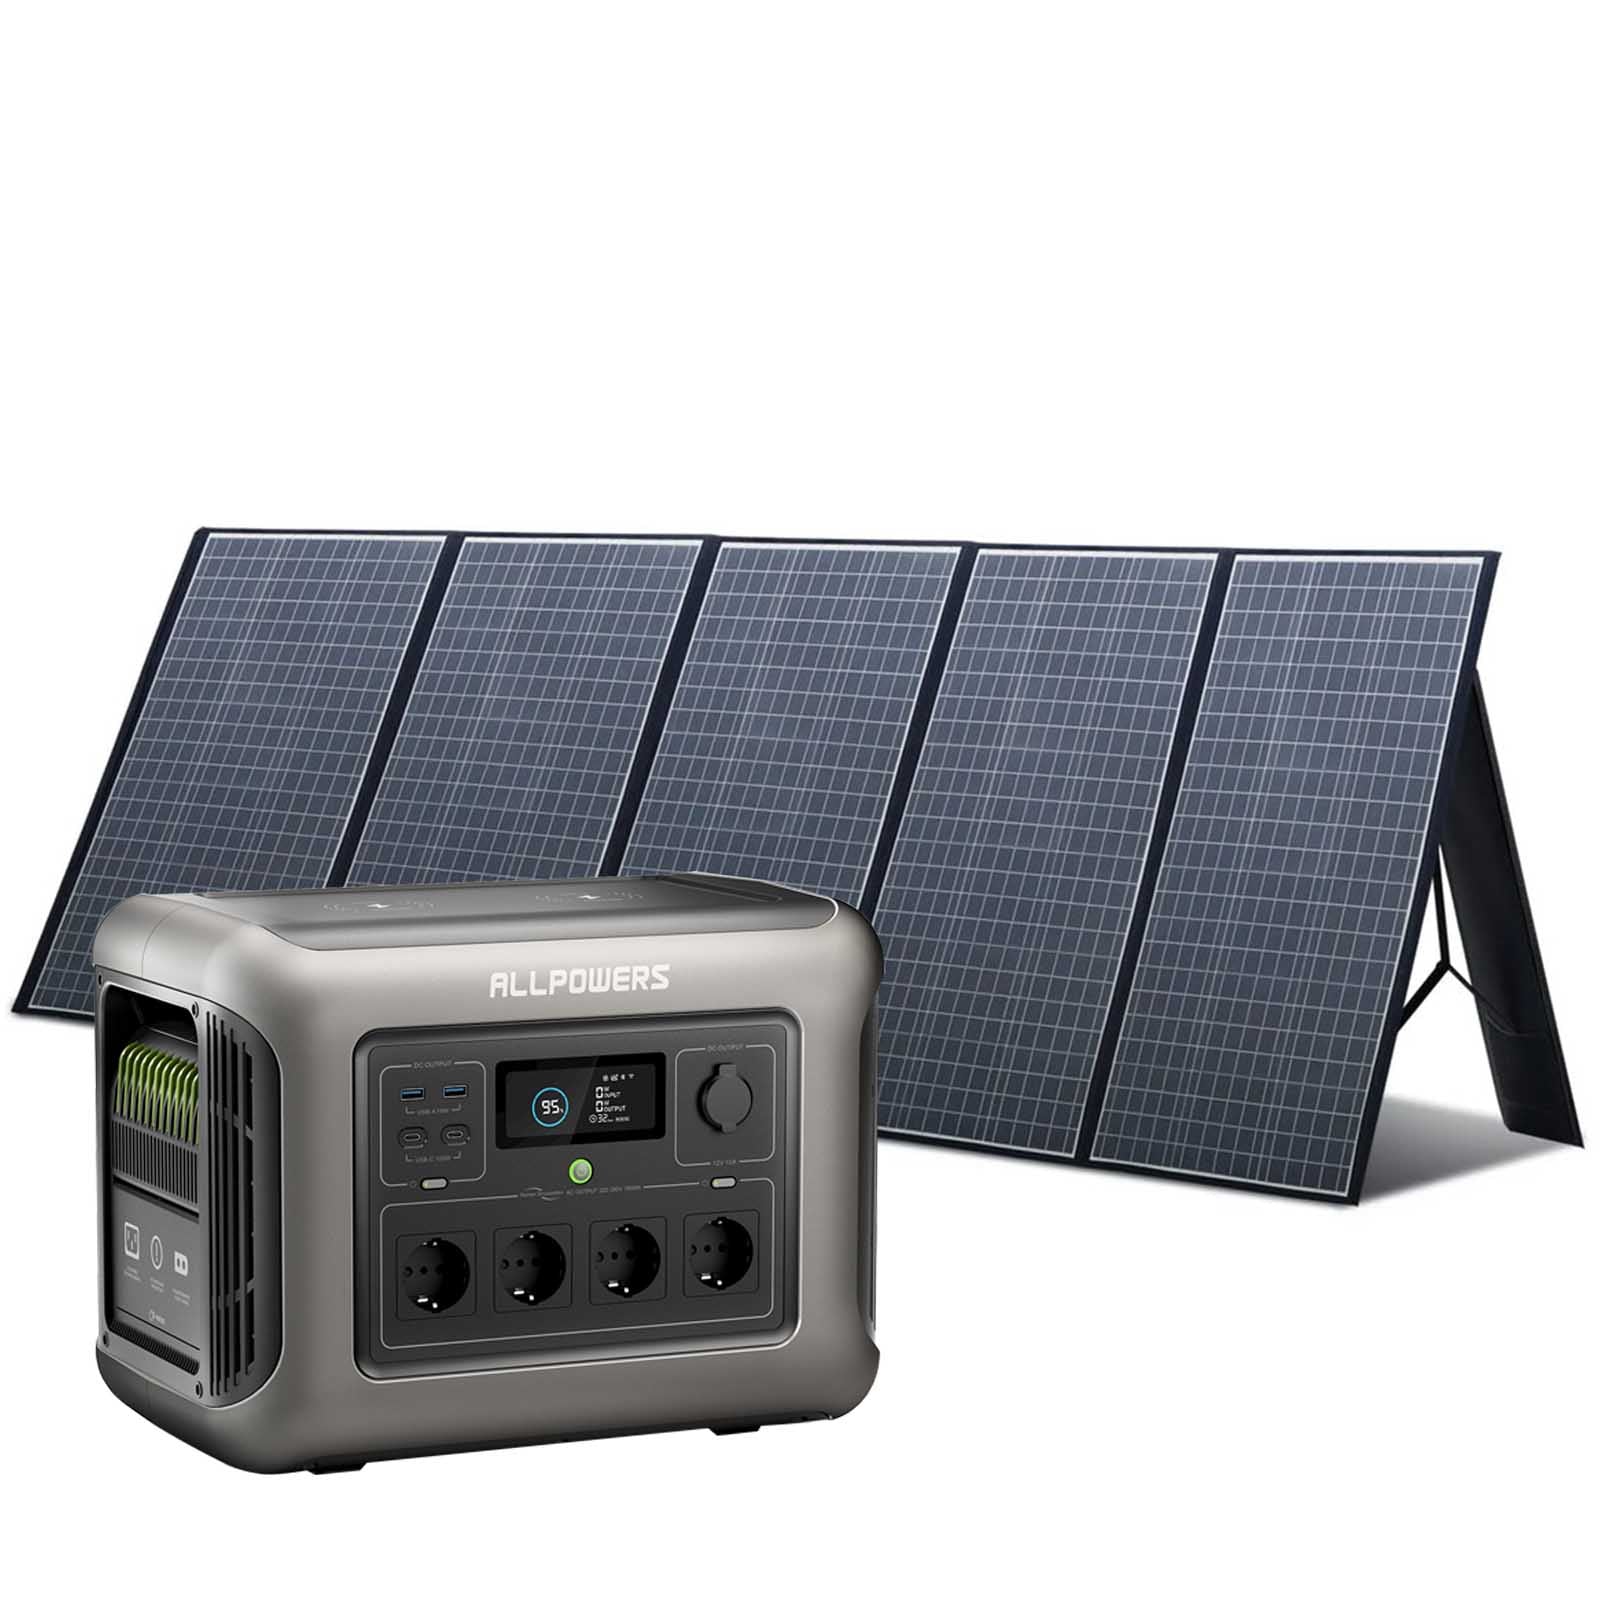 r1500-1-sp037-solar-generator-kit.jpg